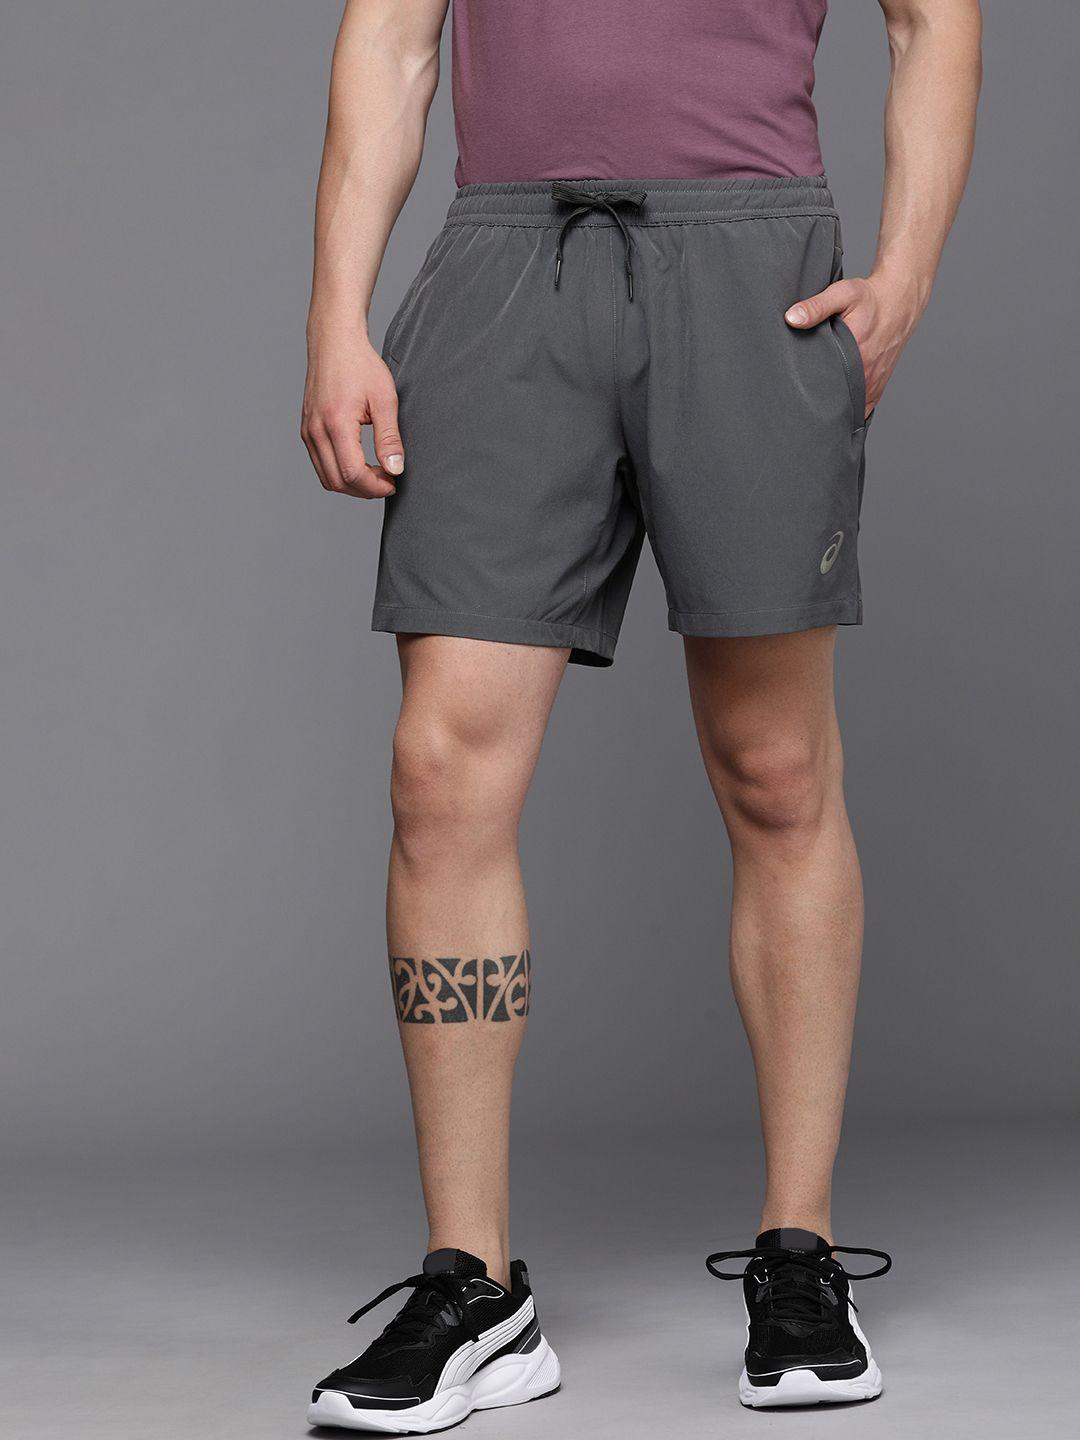 asics men grey brand logo printed running sports shorts